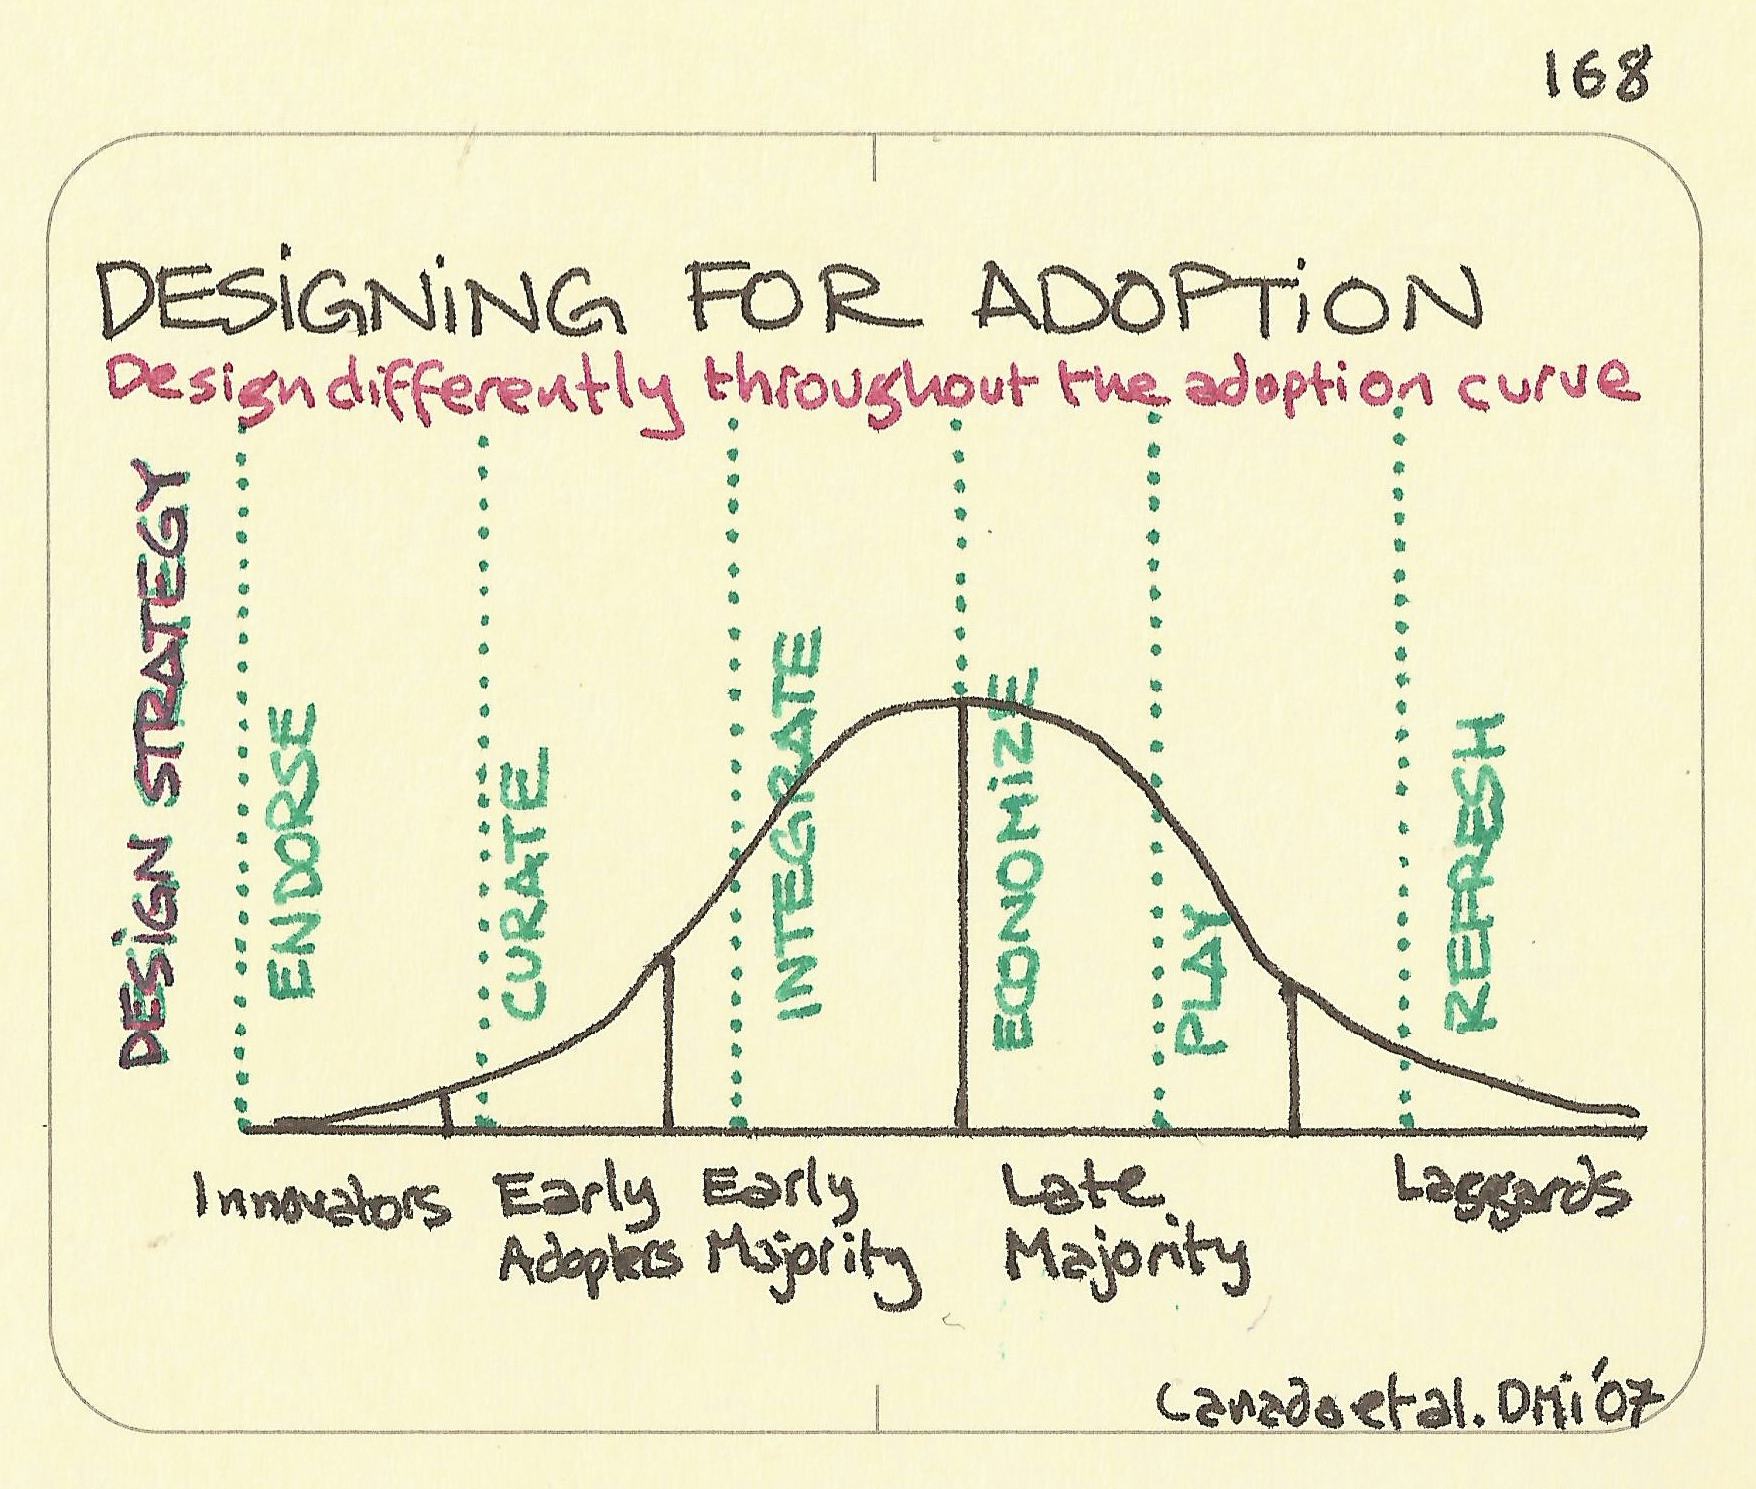 Designing for adoption - Sketchplanations